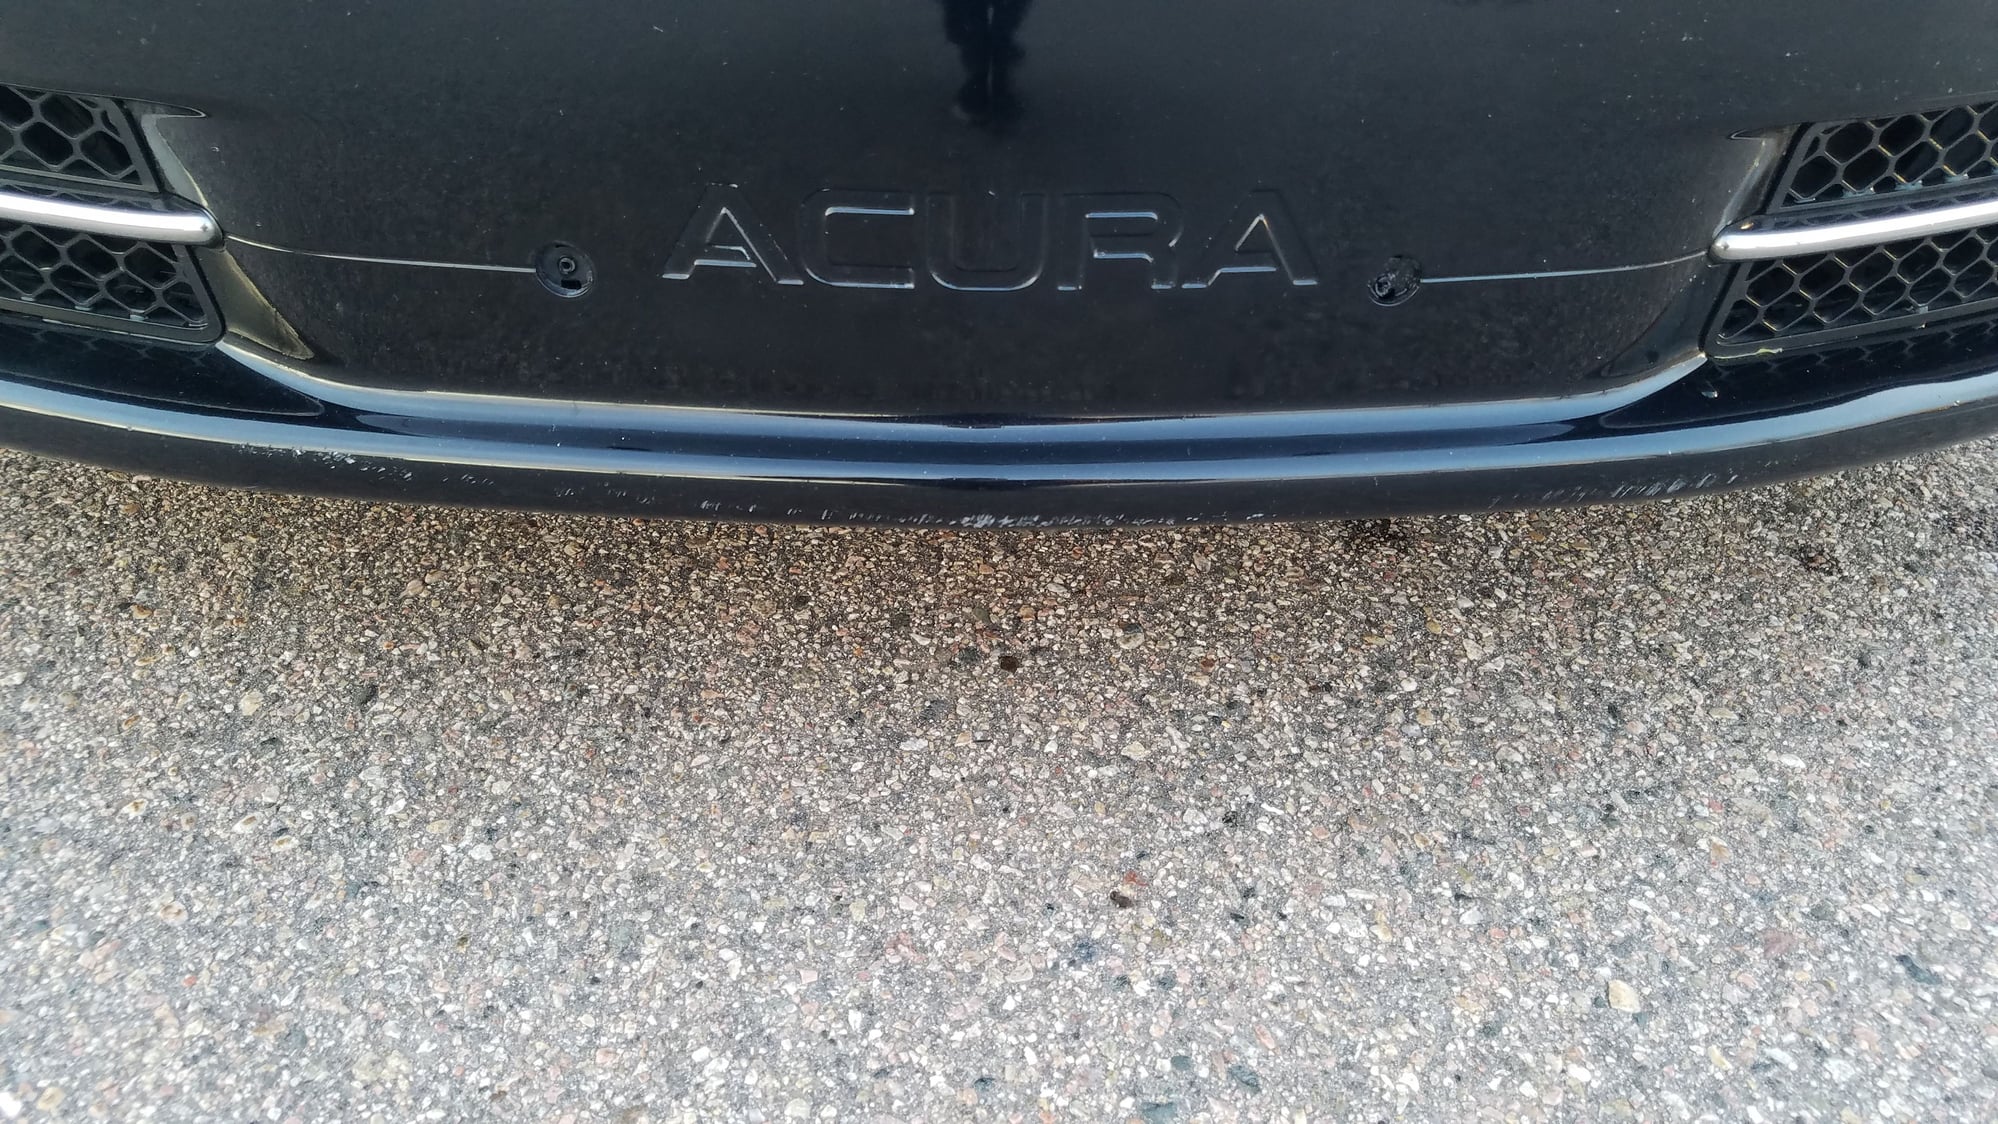 2007 Acura TL - FS: 2007 TL Type S Manual - Used - VIN 19UUA75517A014622 - 72,613 Miles - 6 cyl - 2WD - Manual - Sedan - Black - Loveland, CO 80538, United States